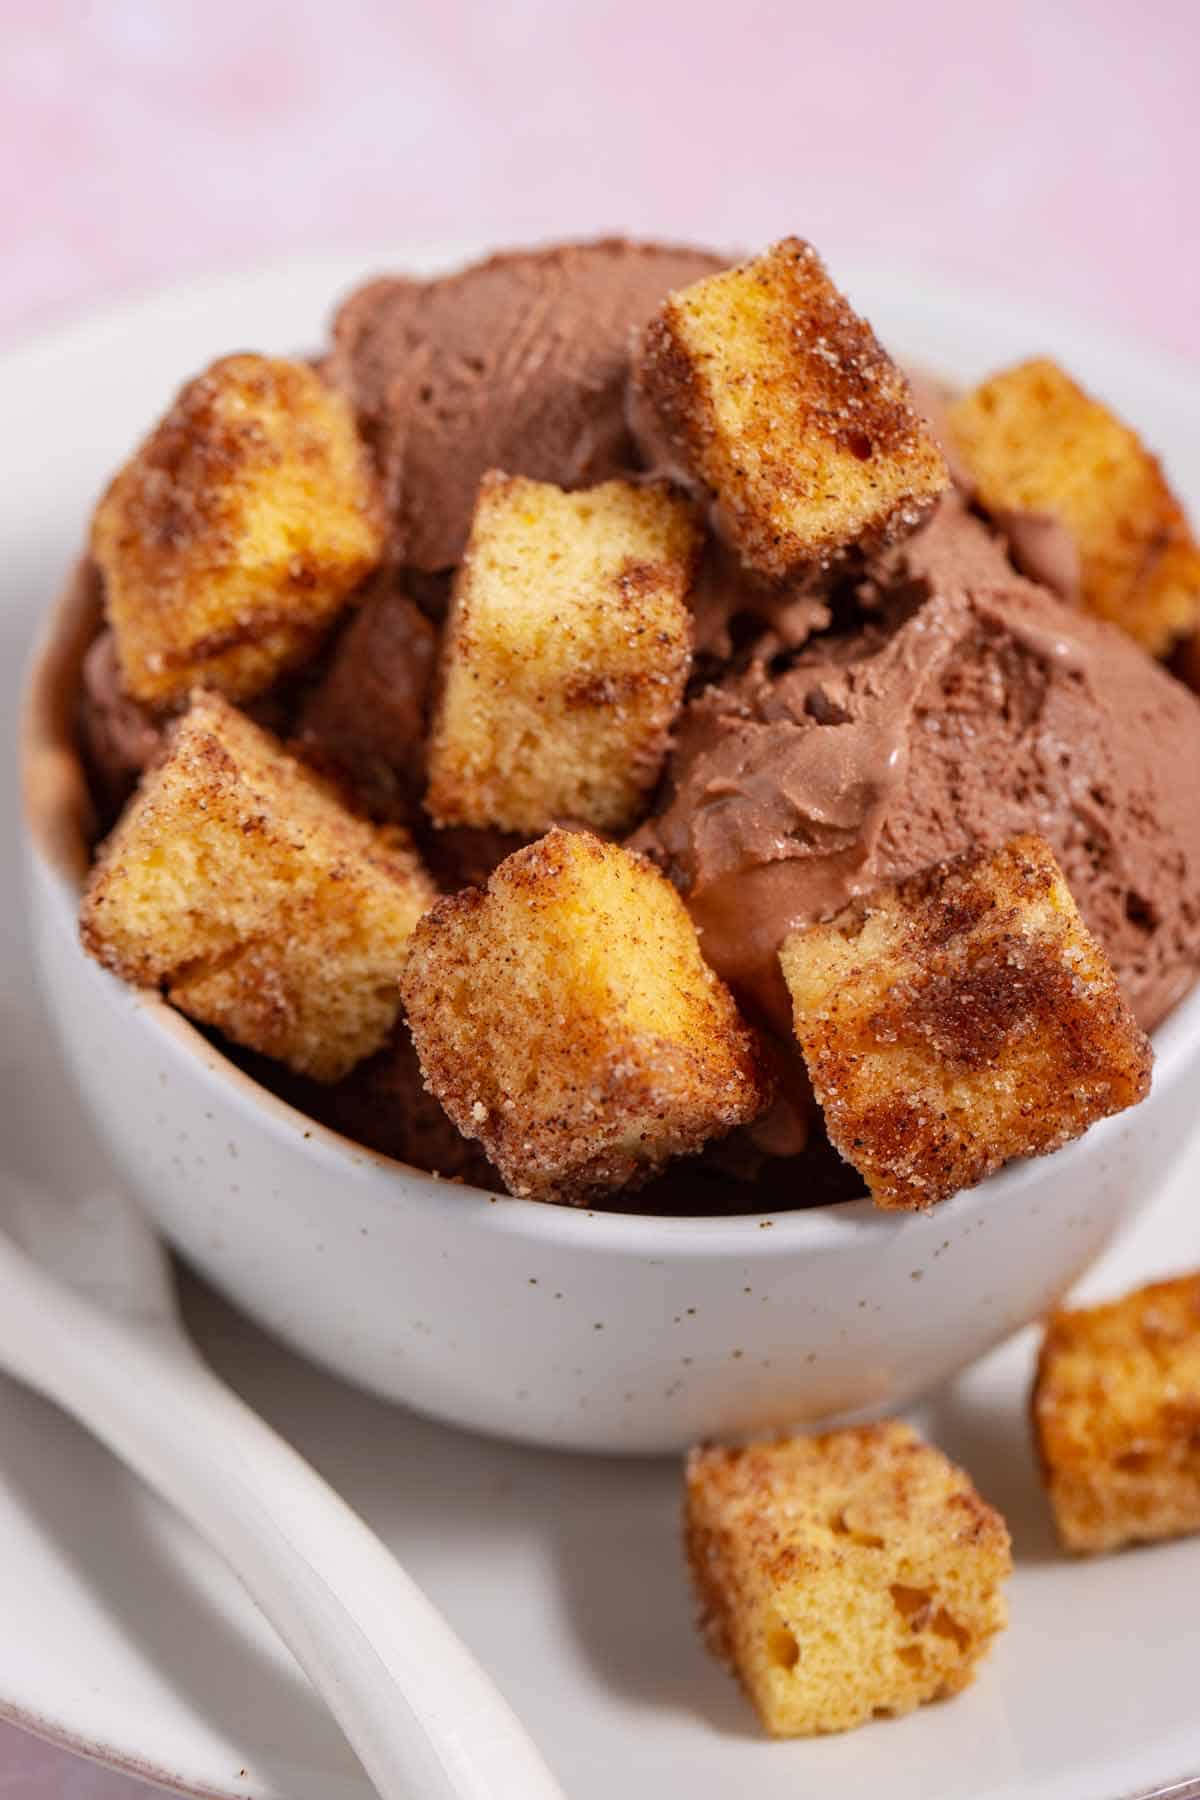 Bowl of chocolate ice cream with cinnamon sugar pound cake croutons.